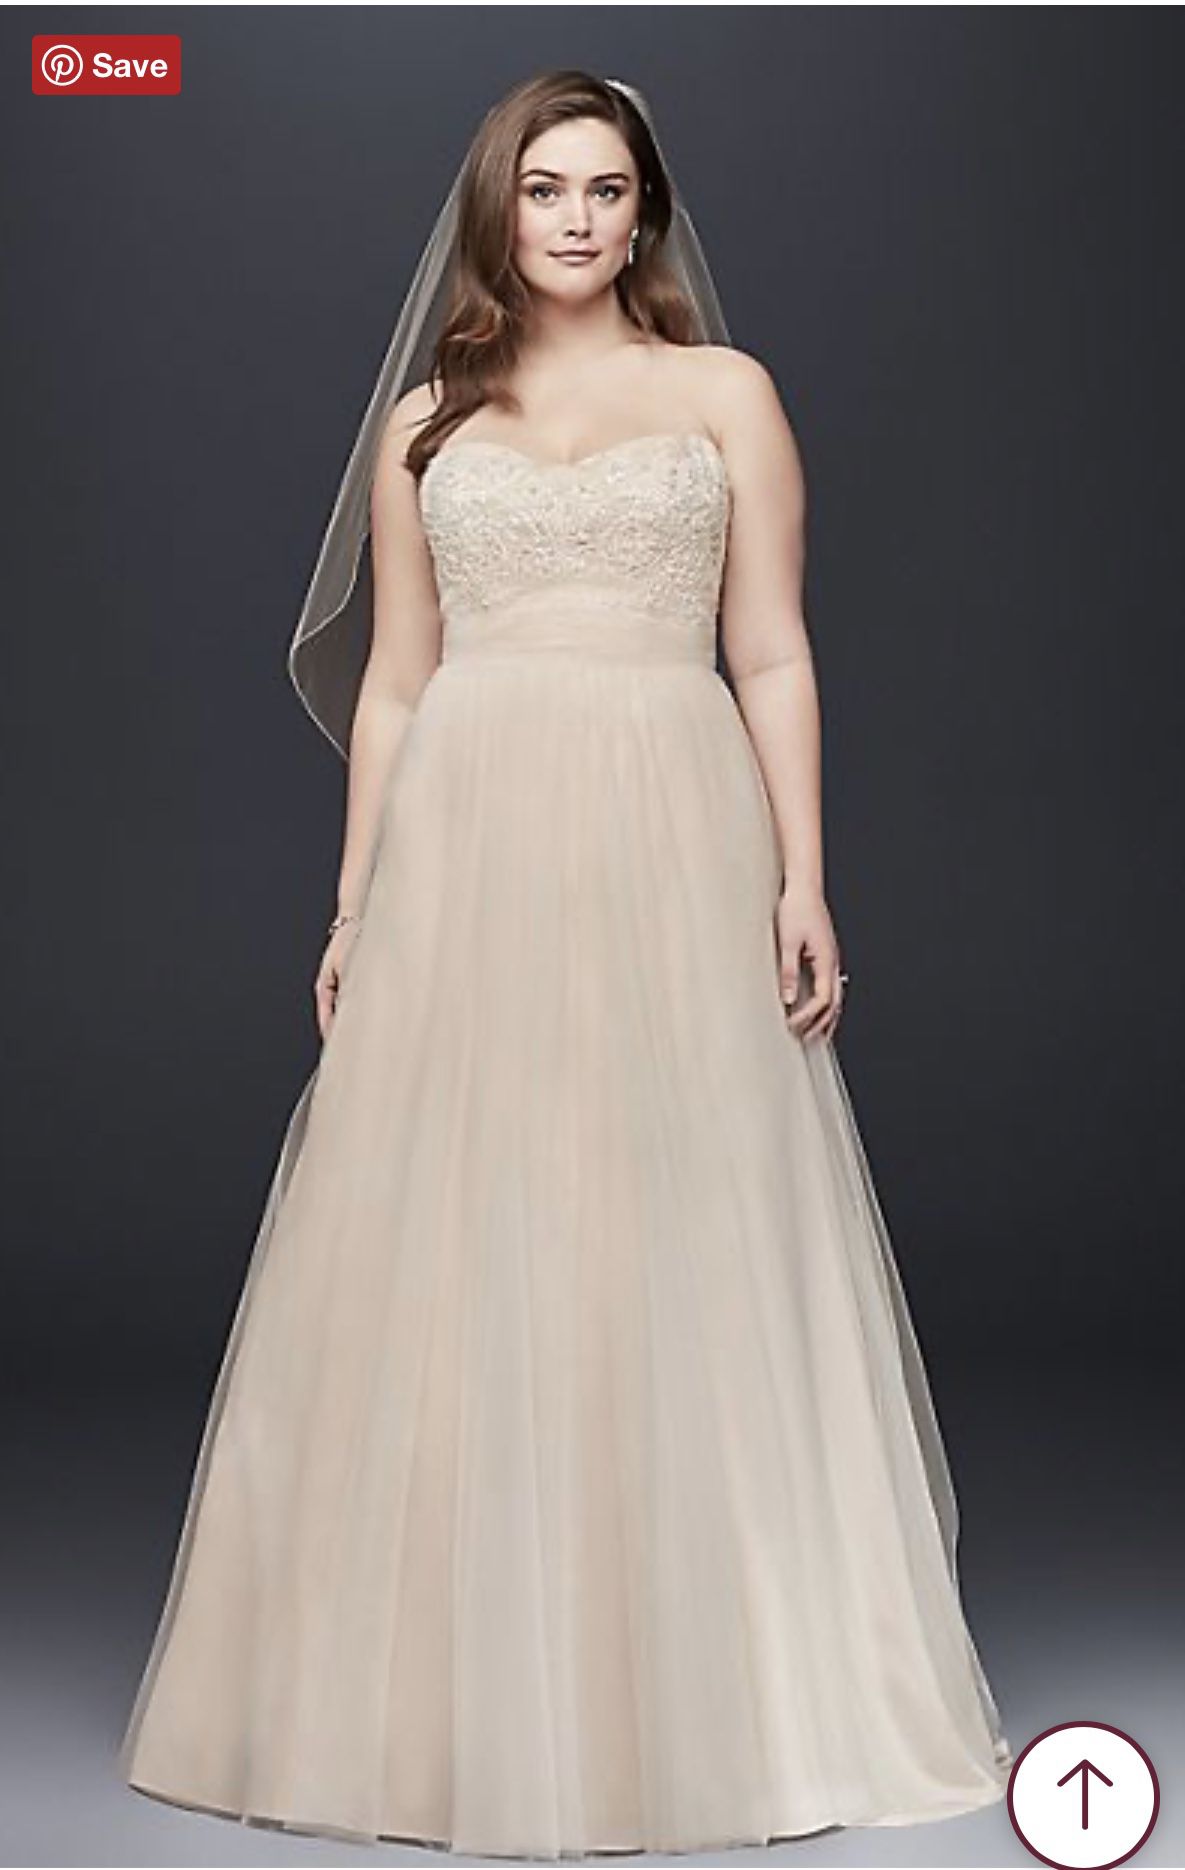 Davids bridal wedding gown size 12 / street size 8